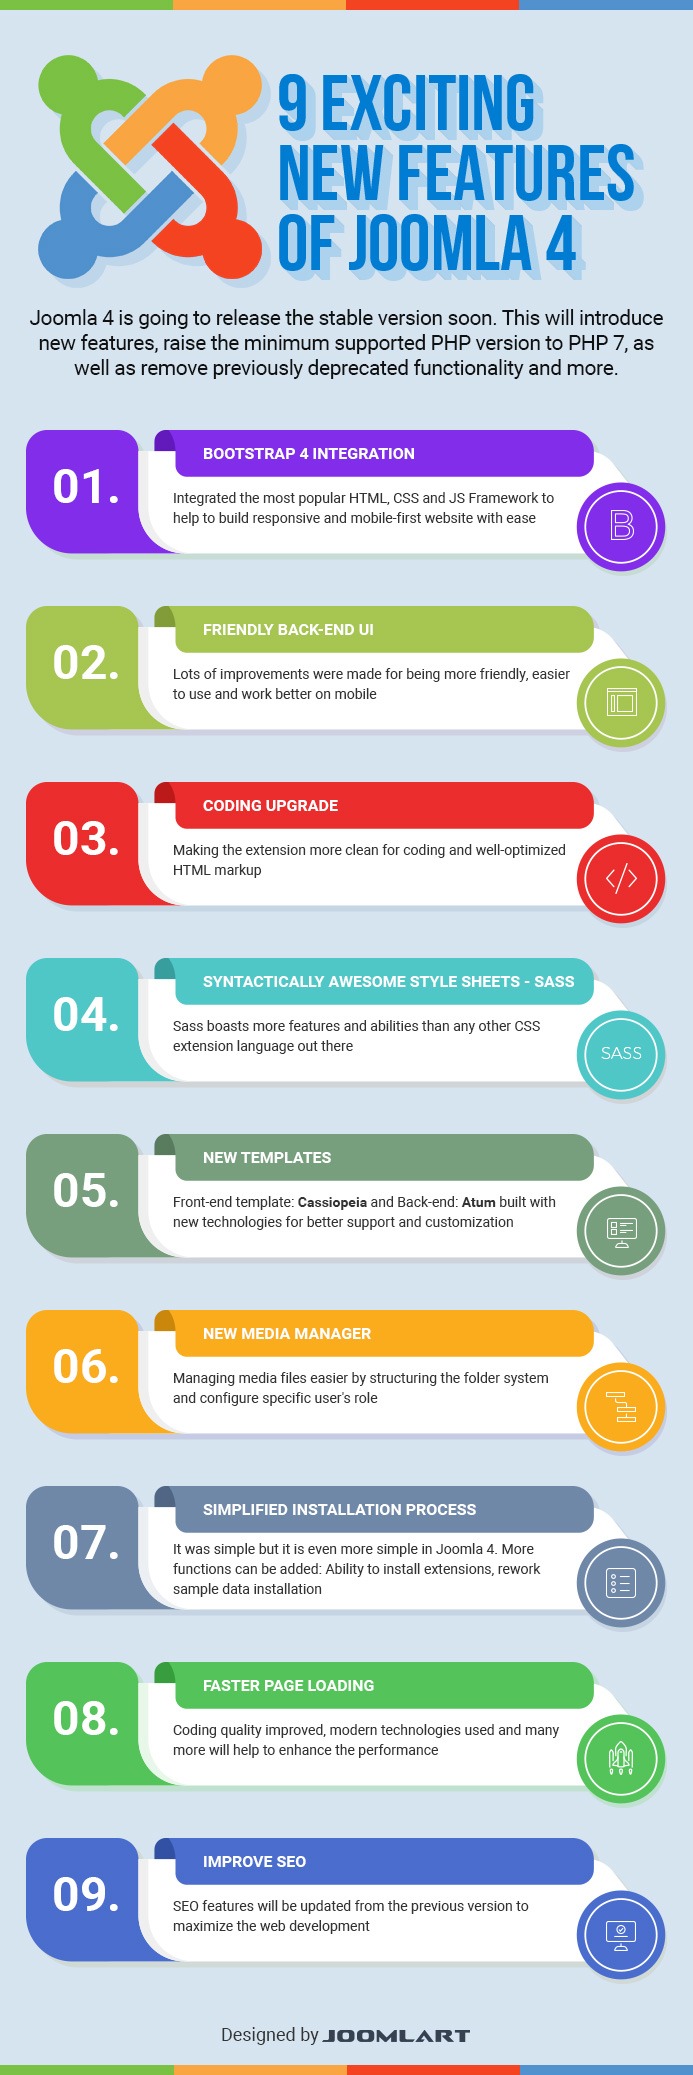 Joomla 4 features infographic